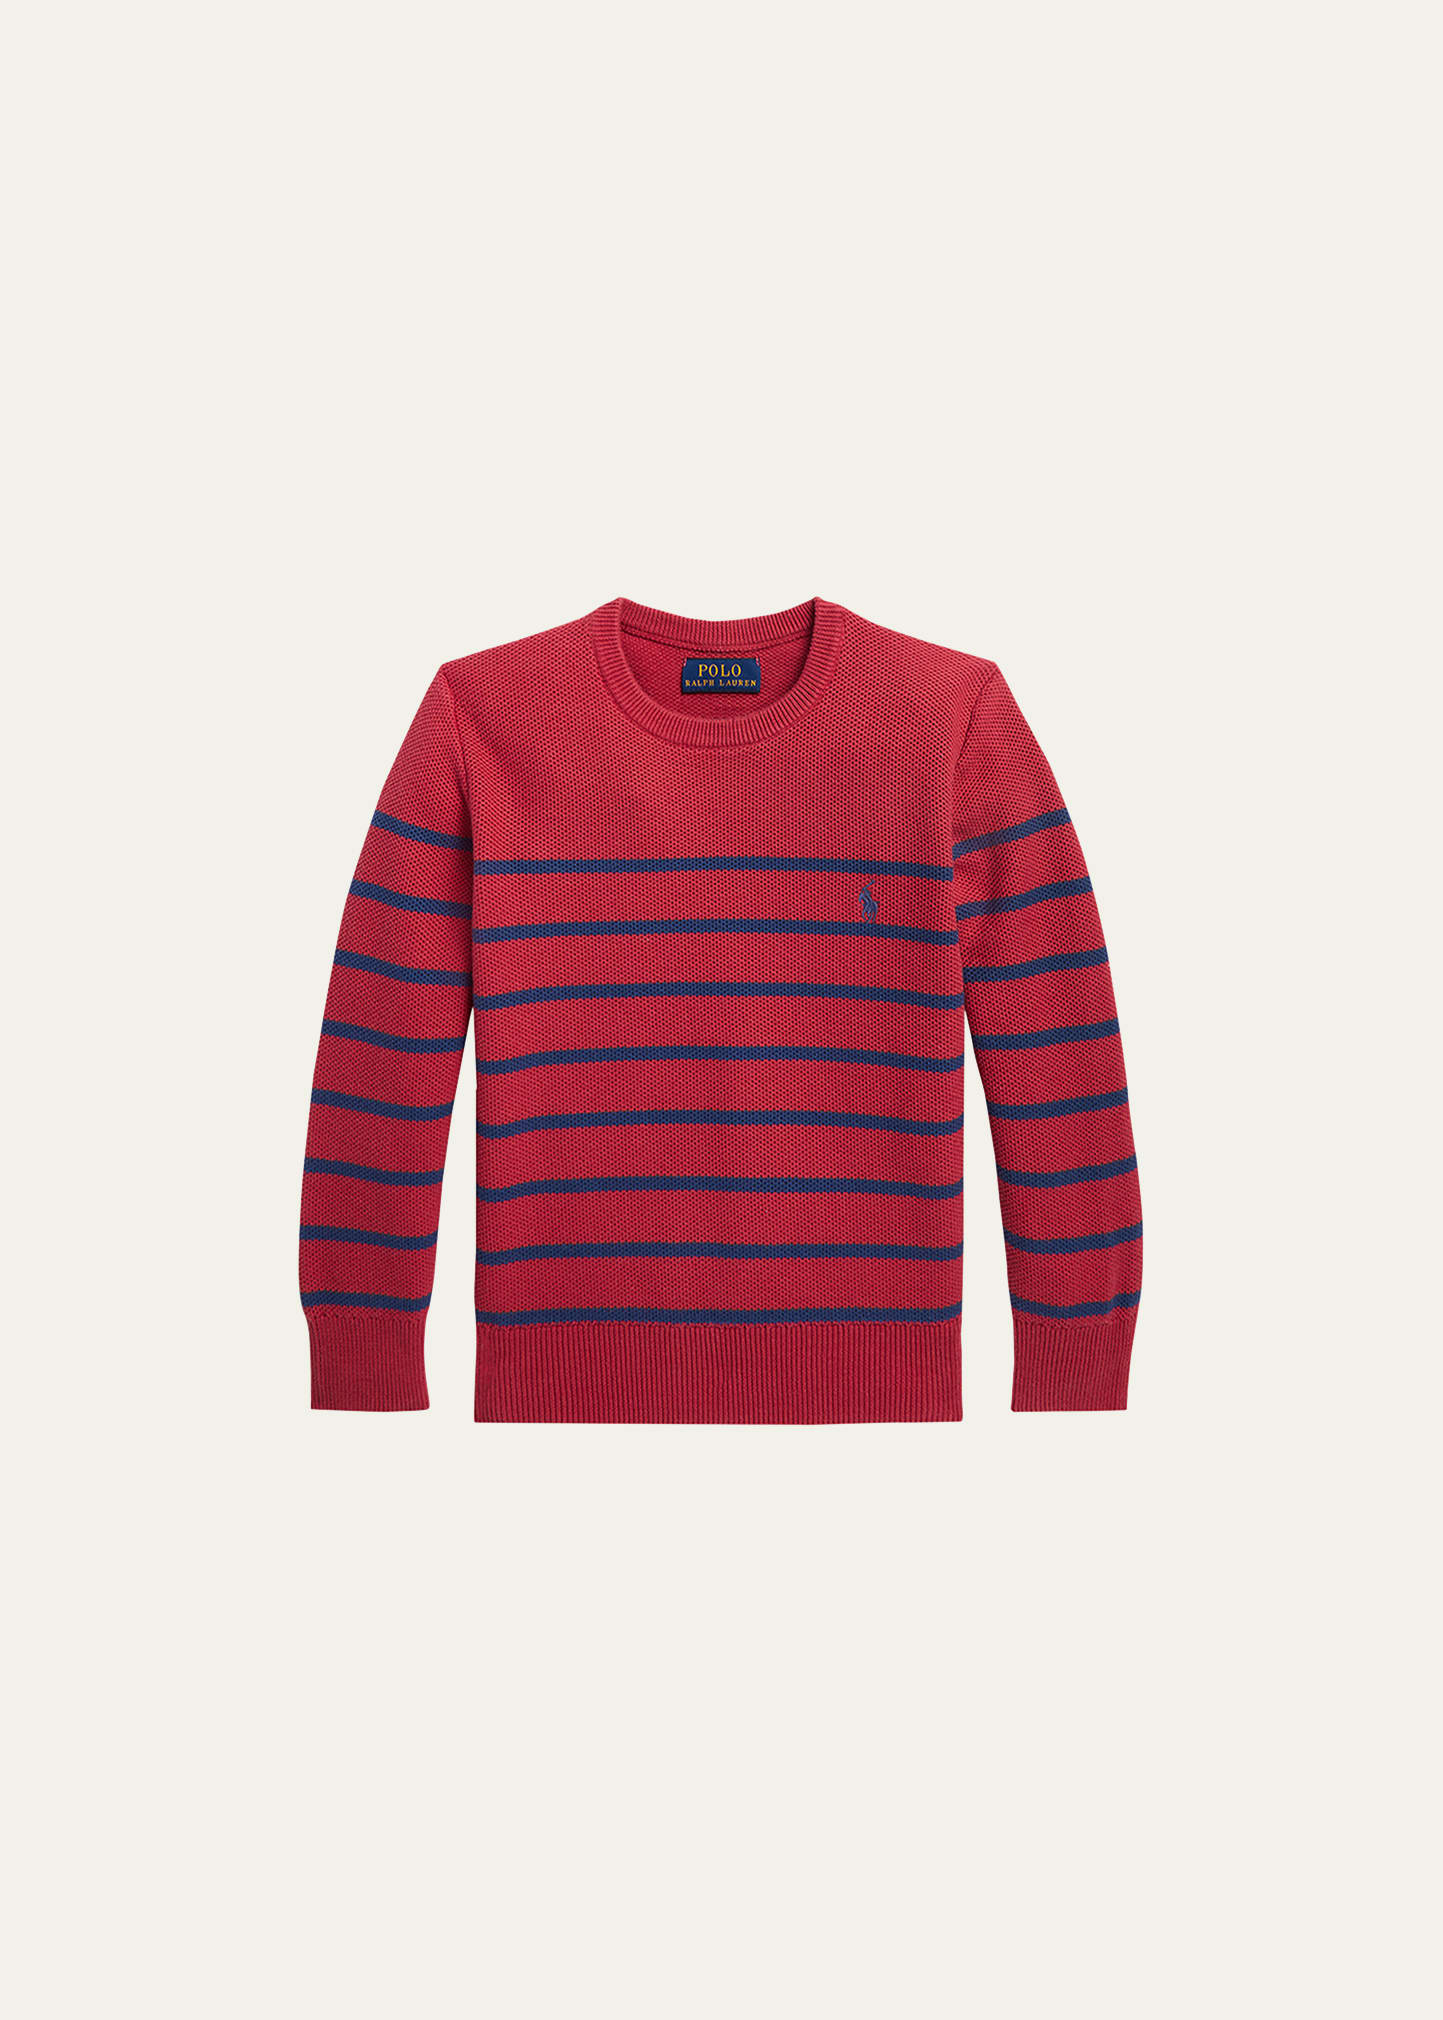 Boy's Mesh Knit Striped Sweater, Size 4-7